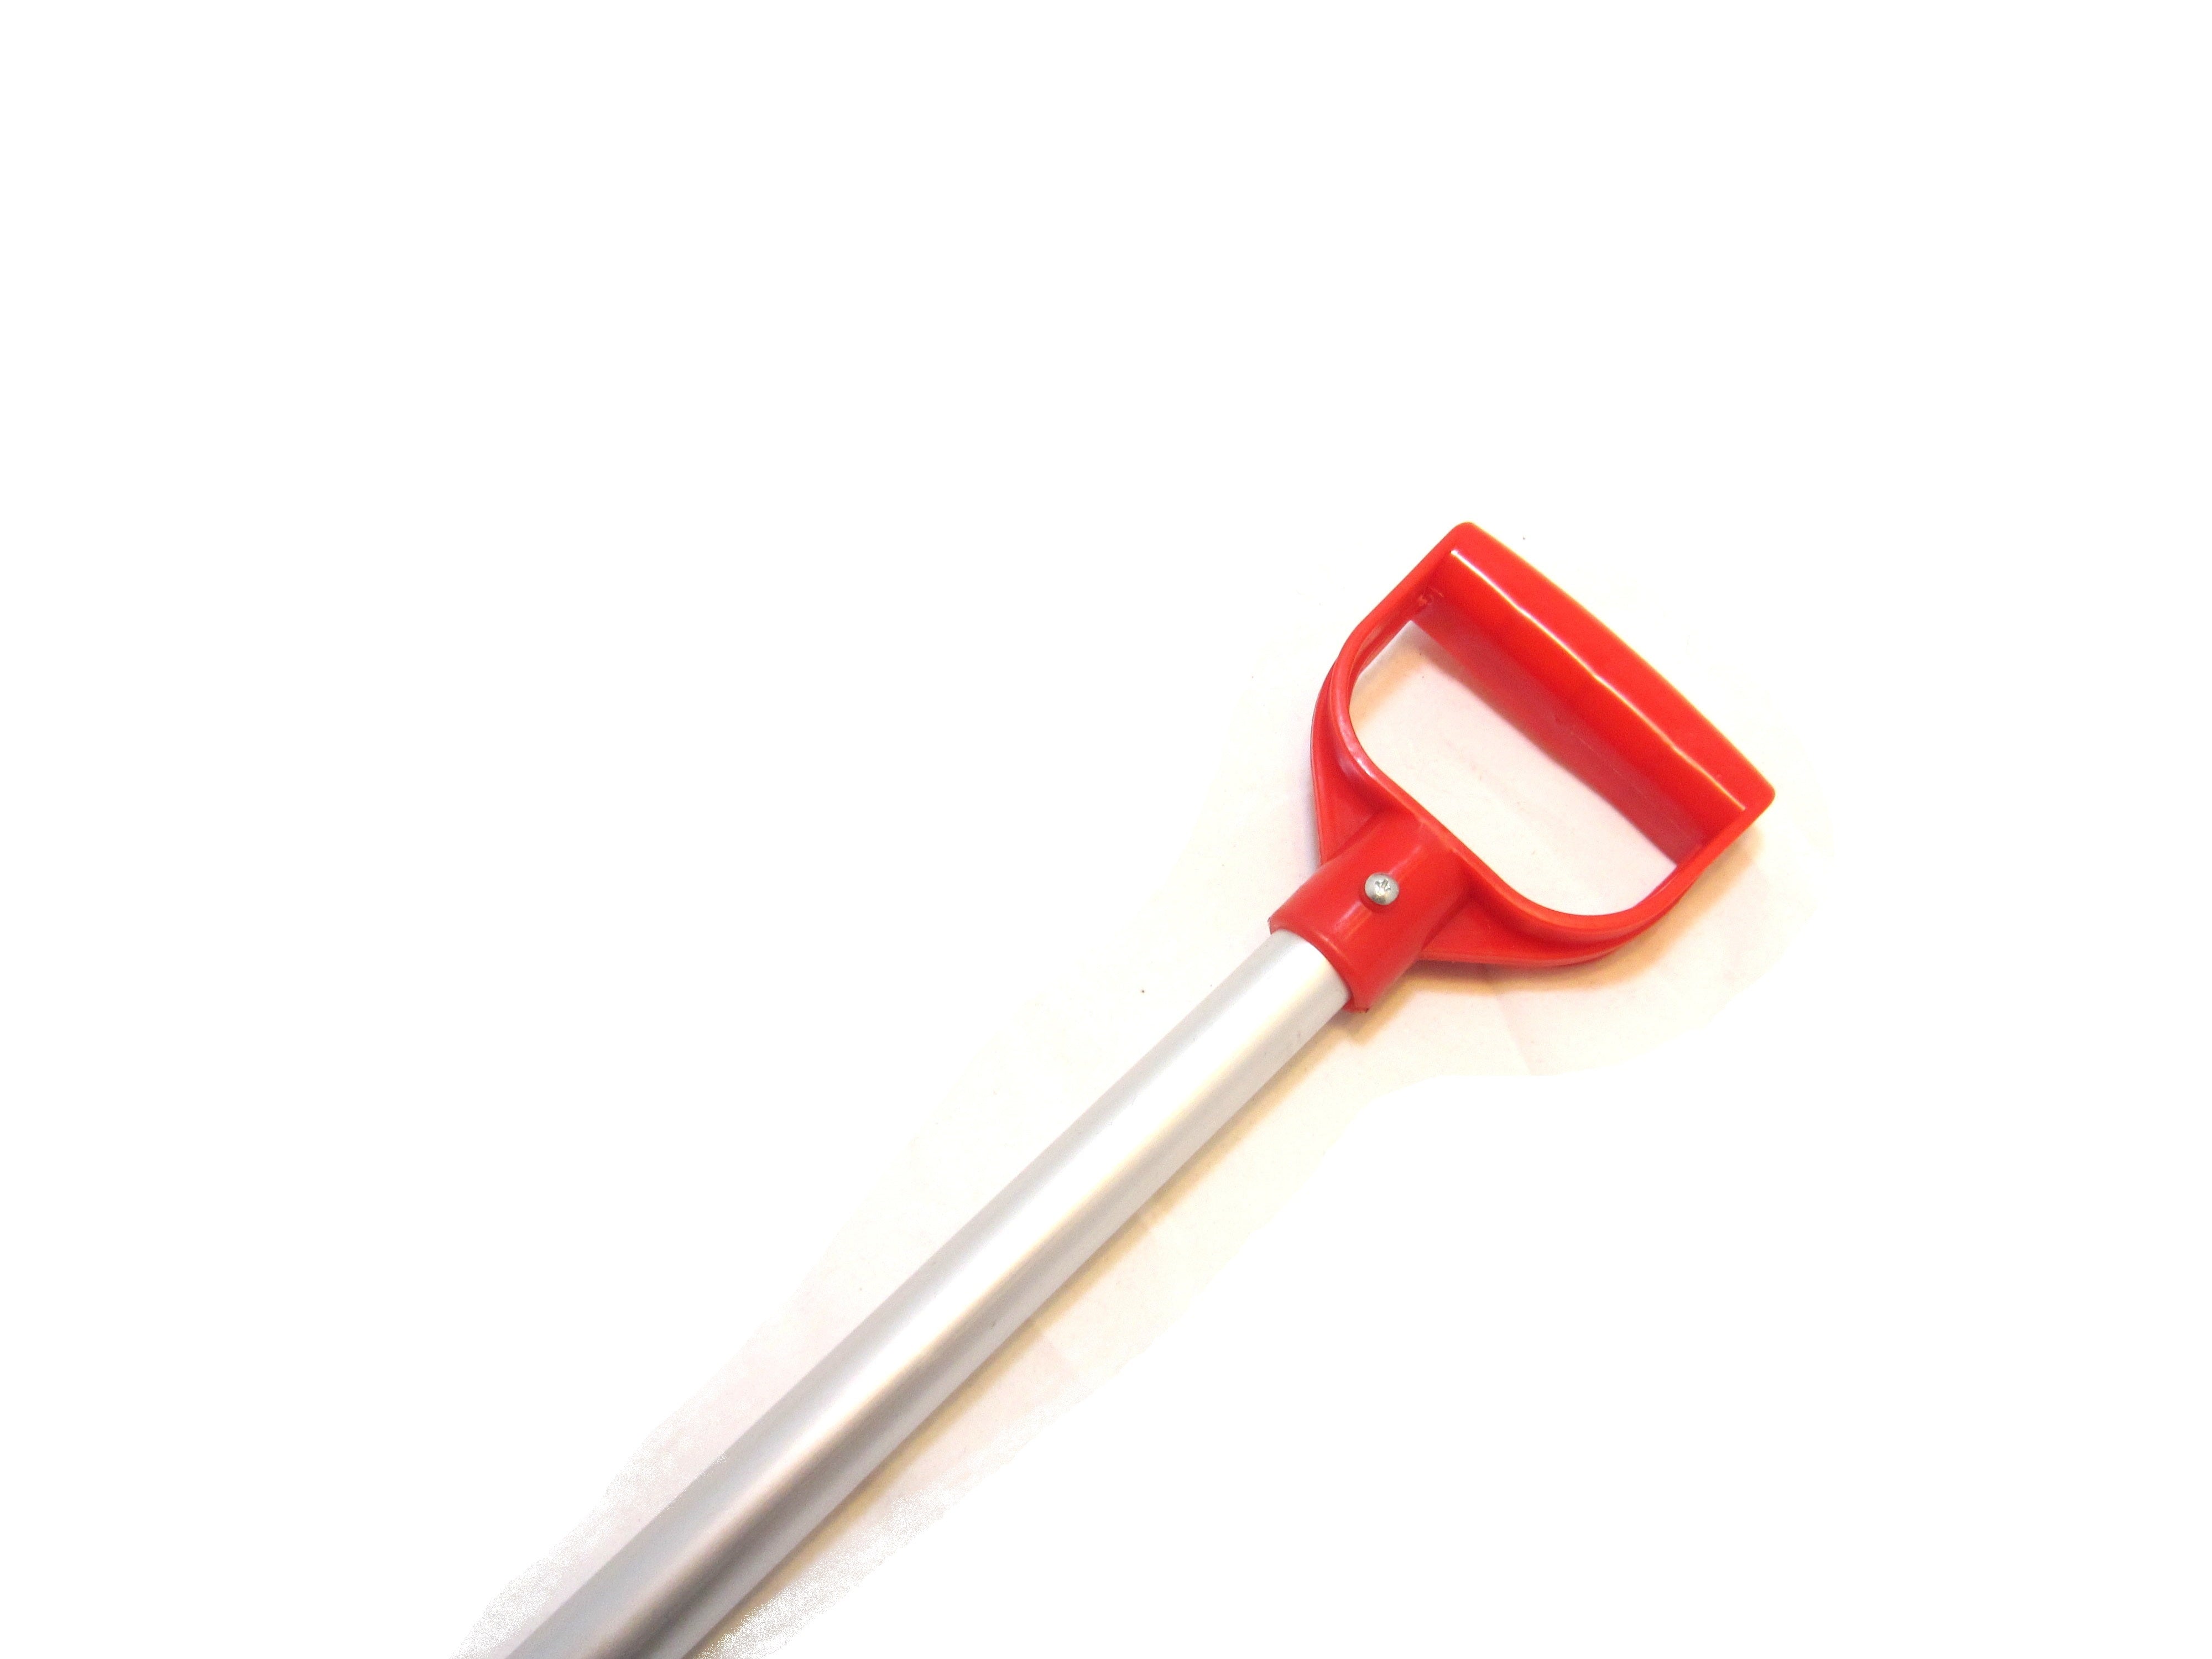 Lightweight pitchfork, Swedish fork, Bollenfork complete with handle in red